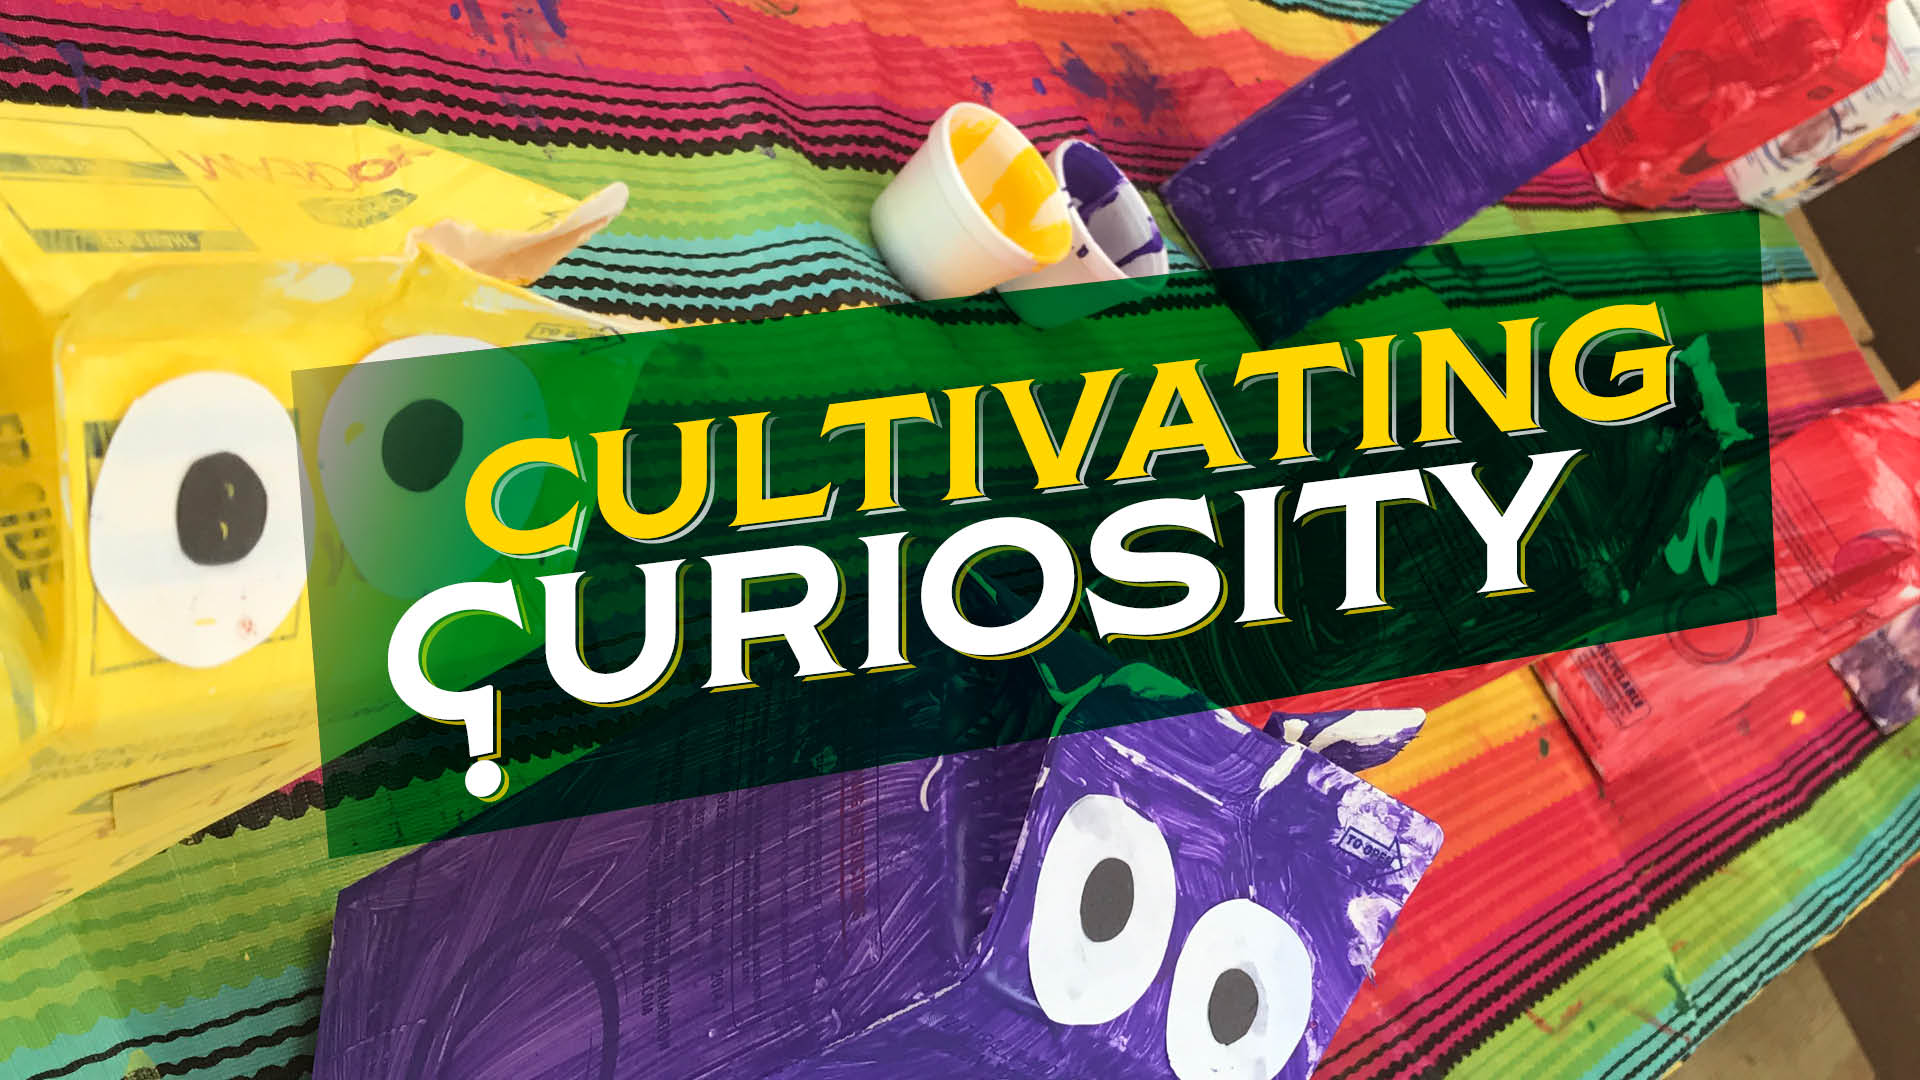 Cultivating Curiosity children's program